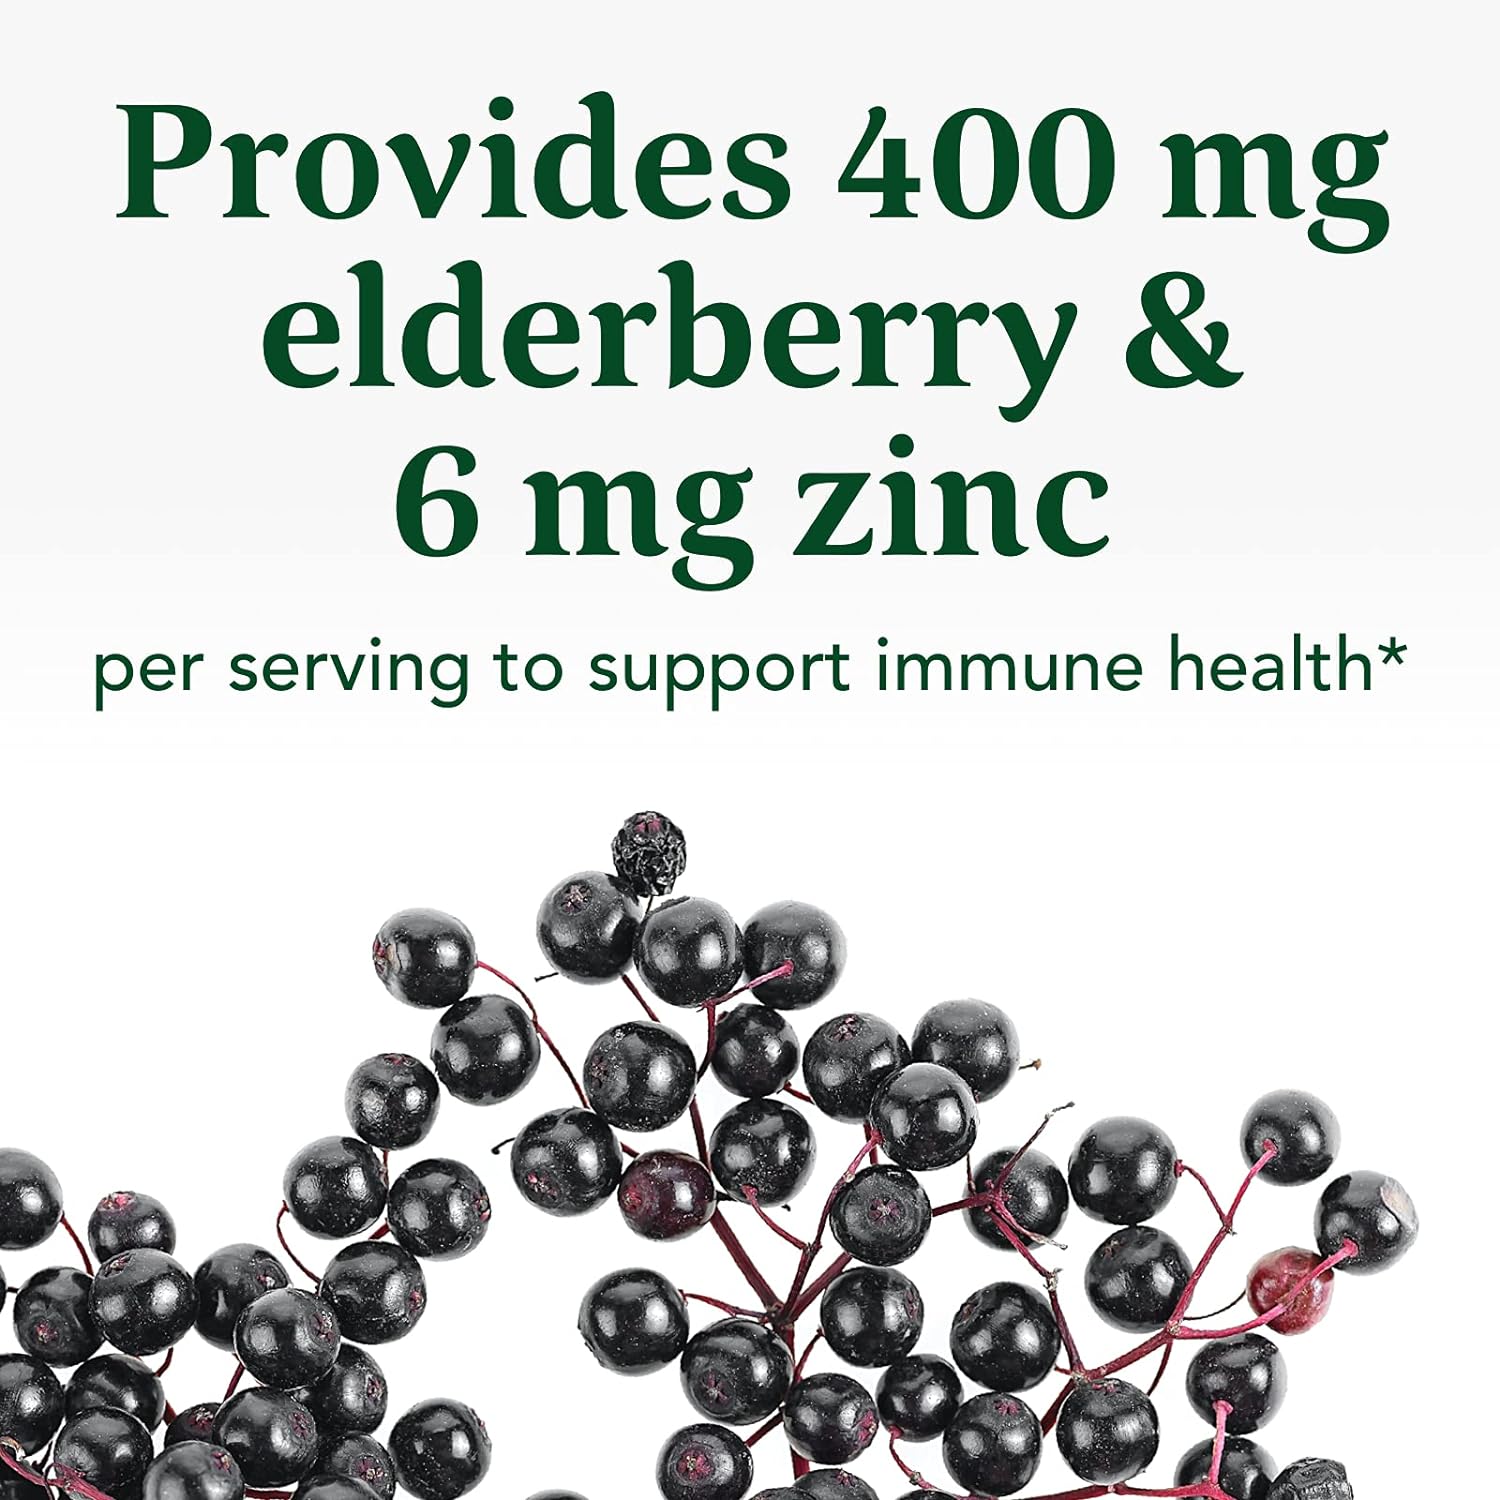 MegaFood Elderberry Immune Support - Gummy with Zinc, Elderberry, Ging